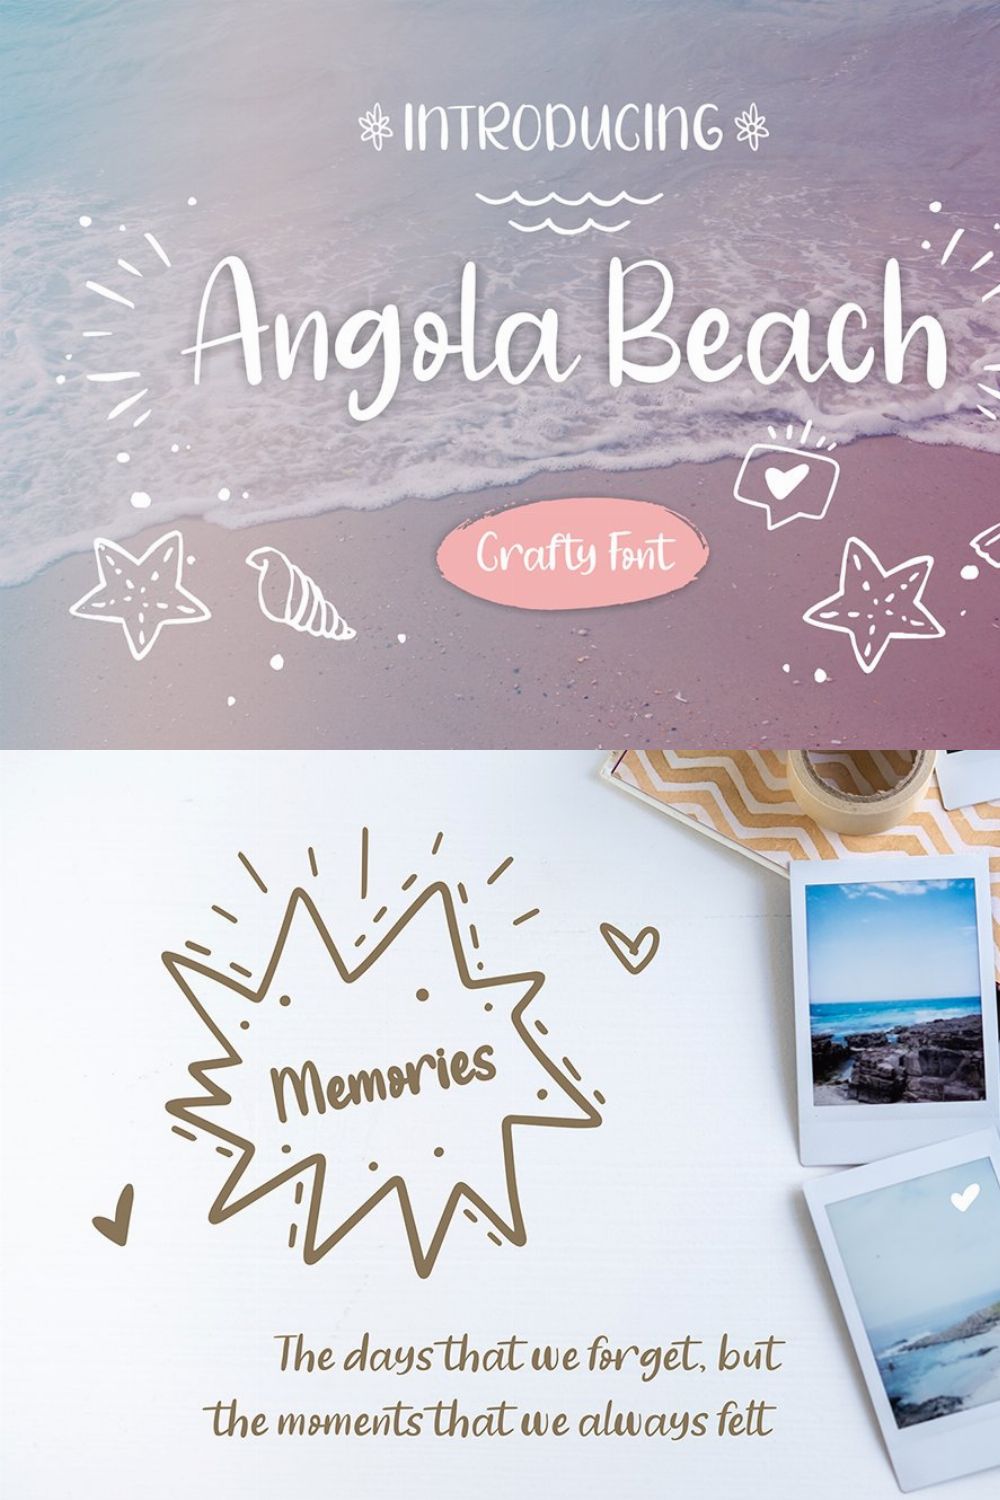 Angola Beach pinterest preview image.